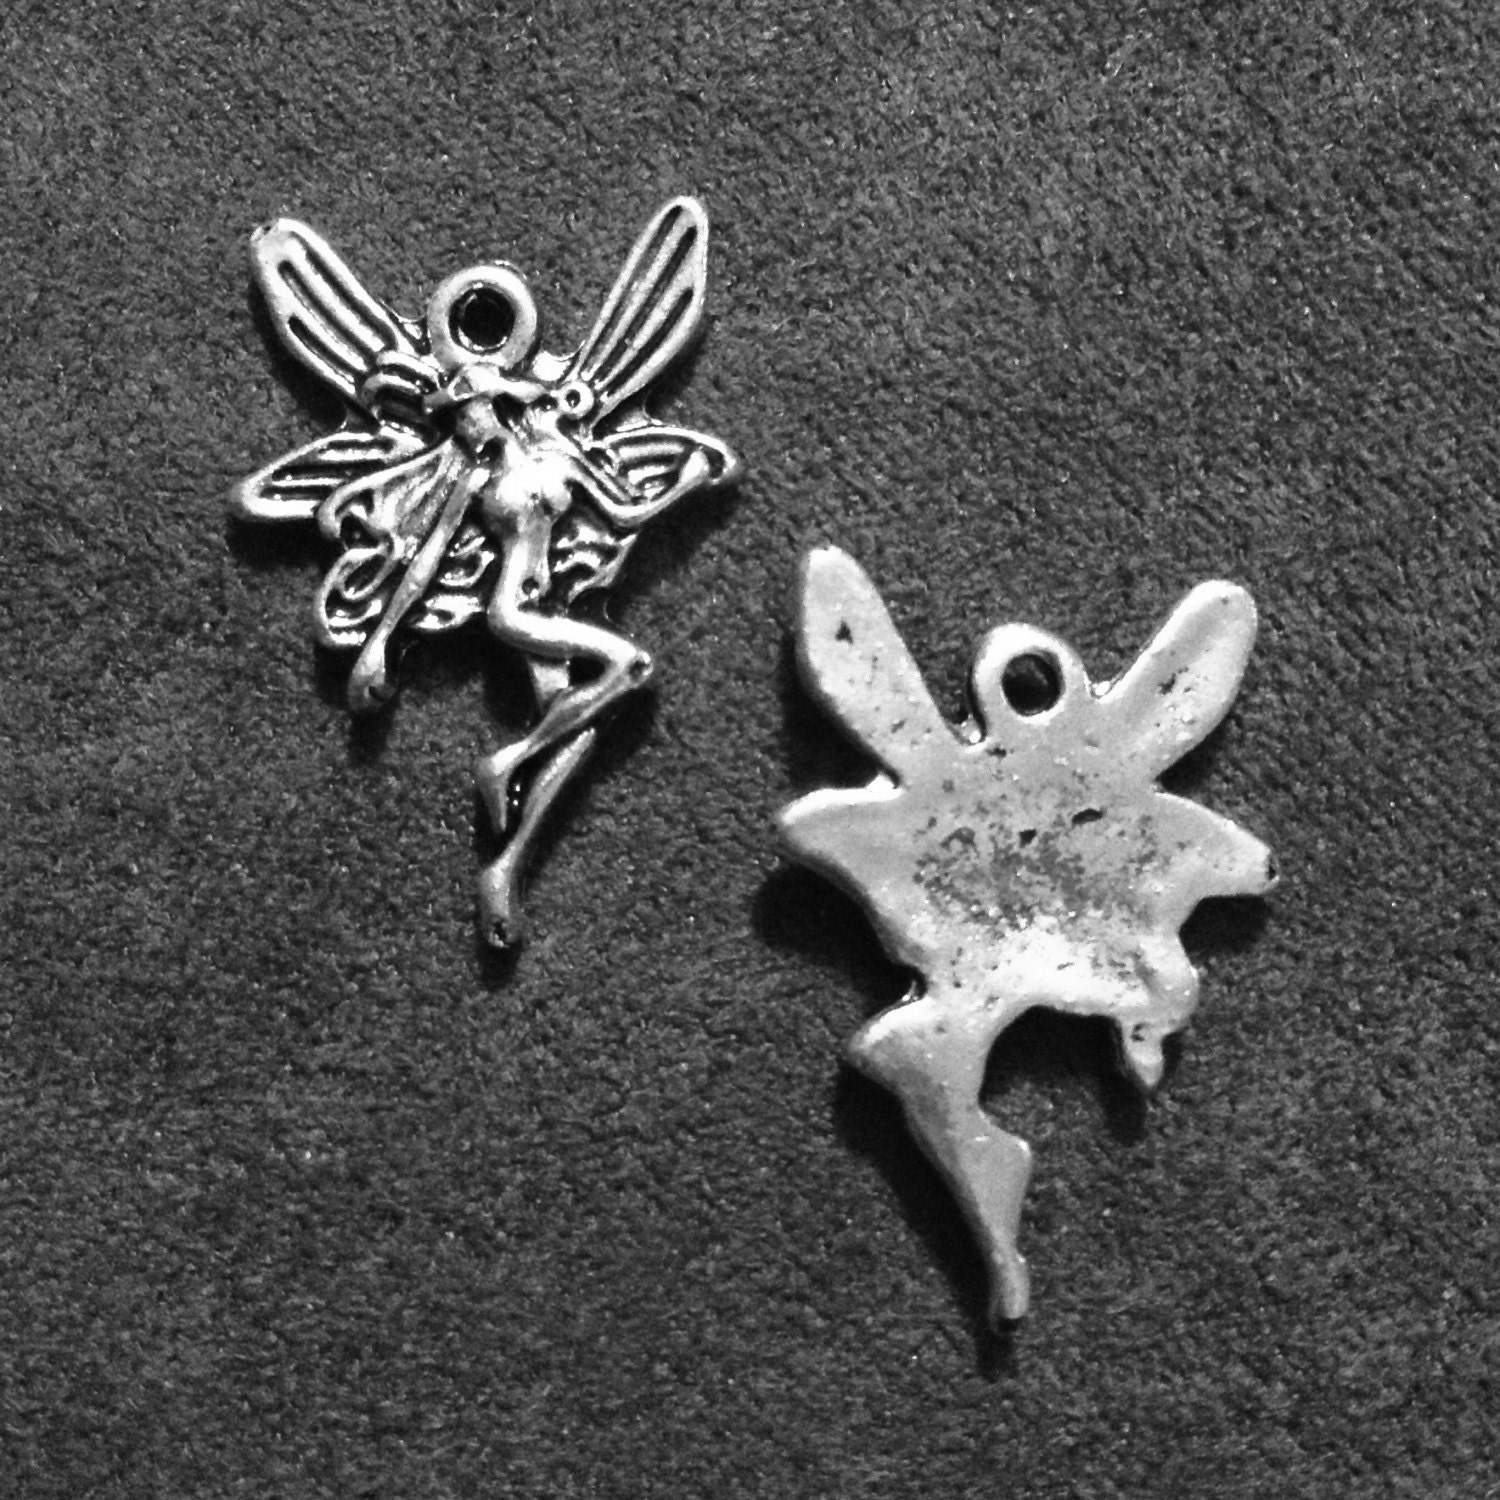 30x Fairy Bulk Charms, Angel Charms, Antique Silver Tone Fairy Charms,  Necklace Pendants D339 